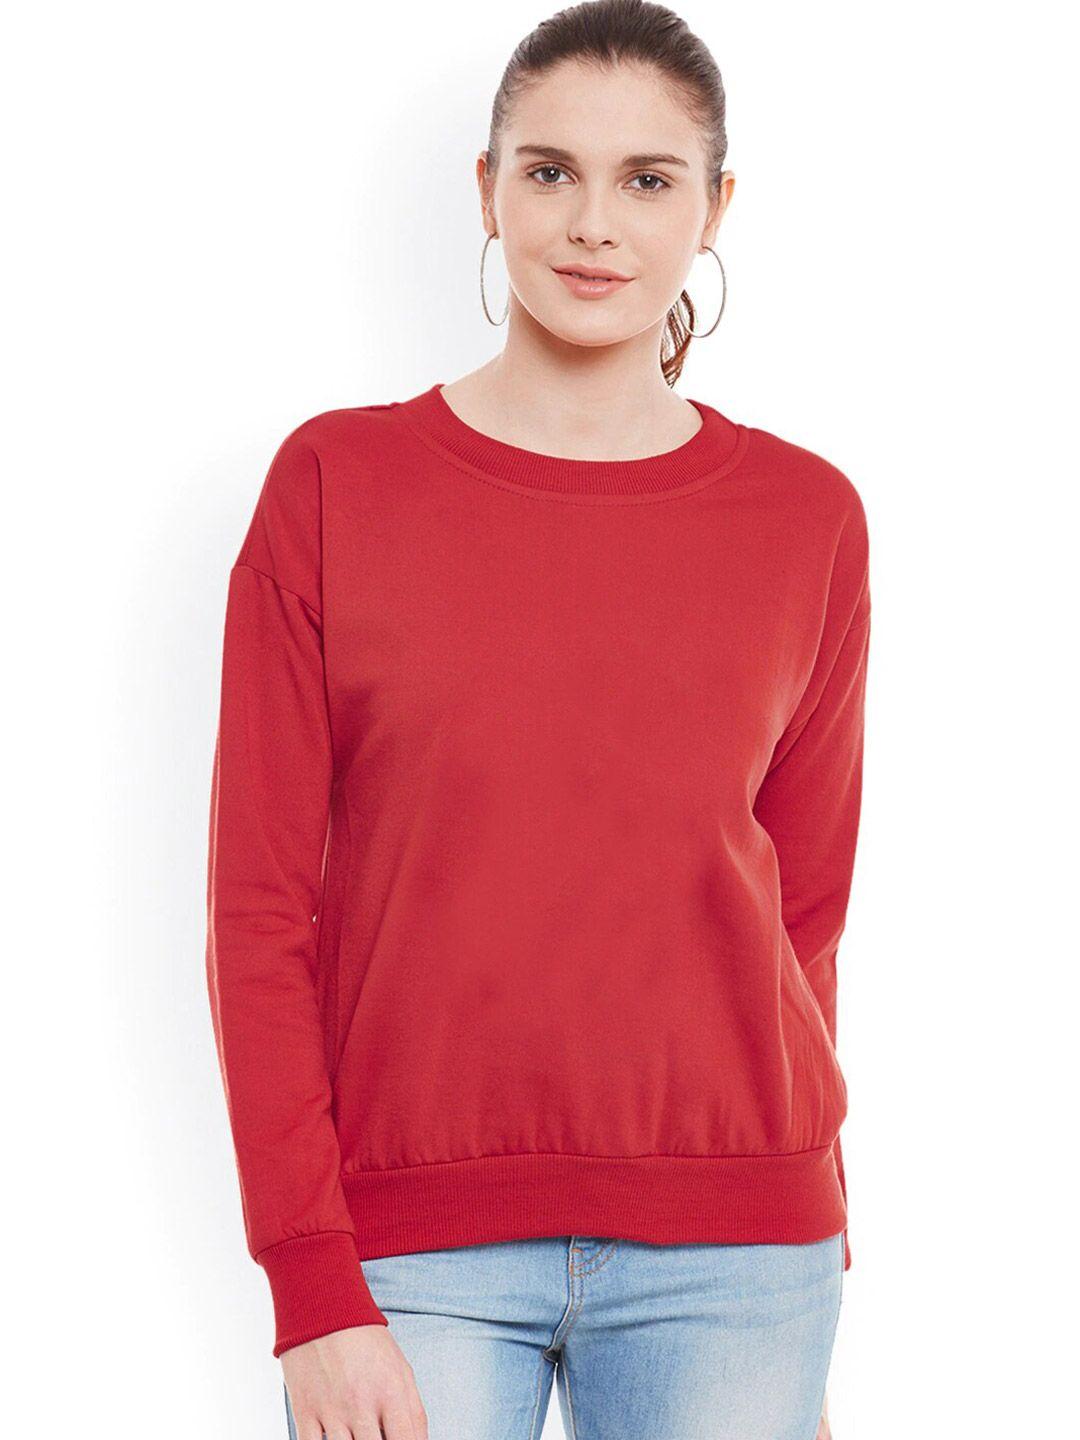 baesd-women-red-sweatshirt